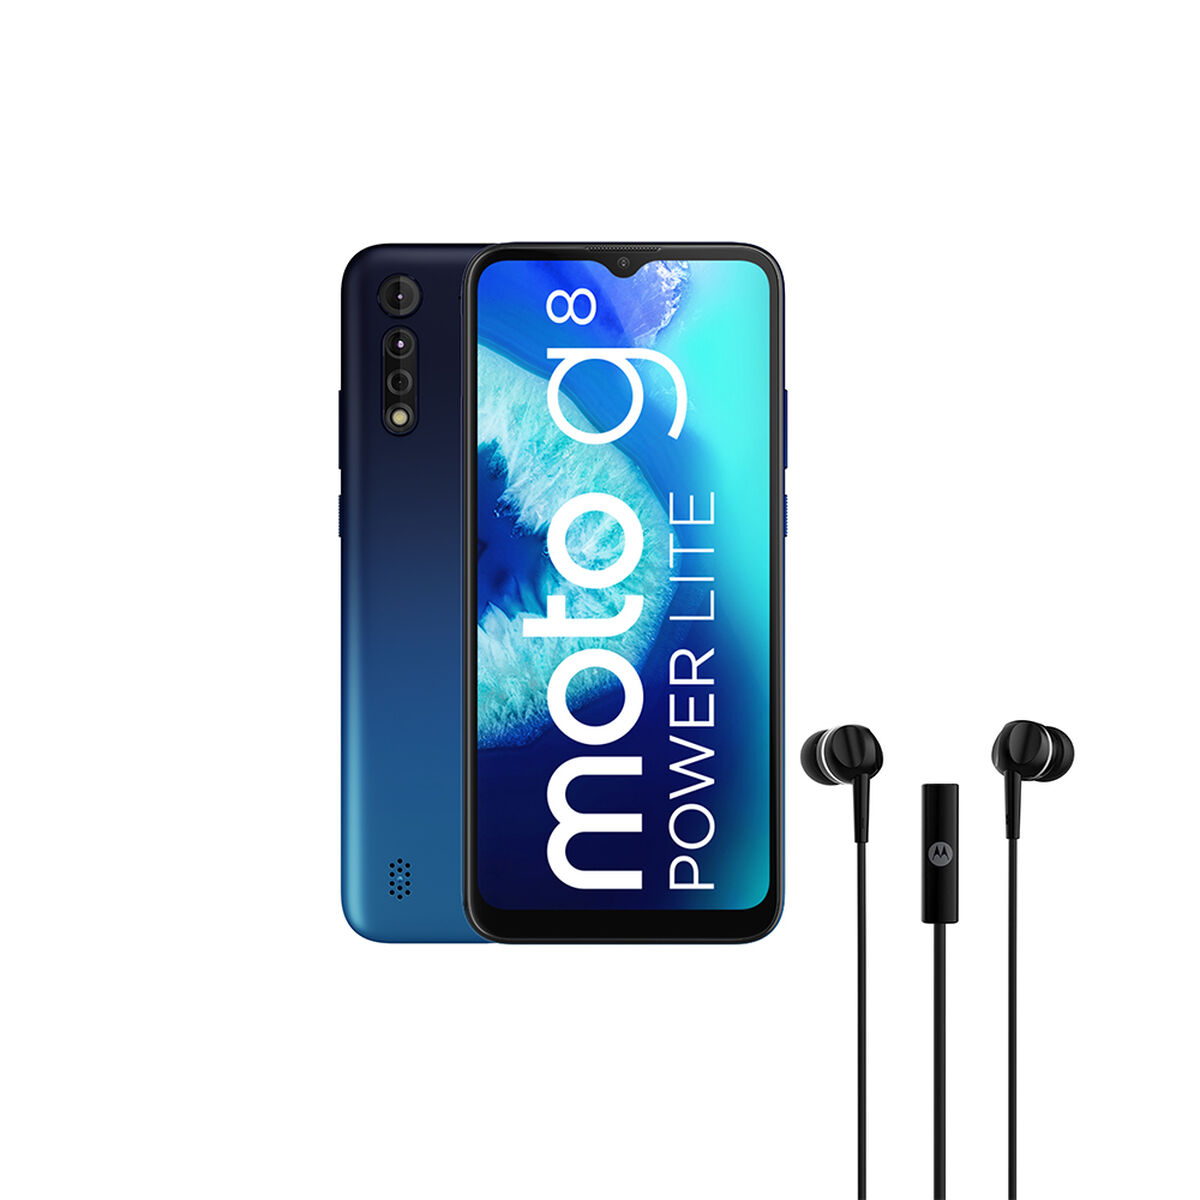 Celular Motorola G8 Power Lite 64GB 6,5" Mora Azul Liberado + Audífonos In Ear